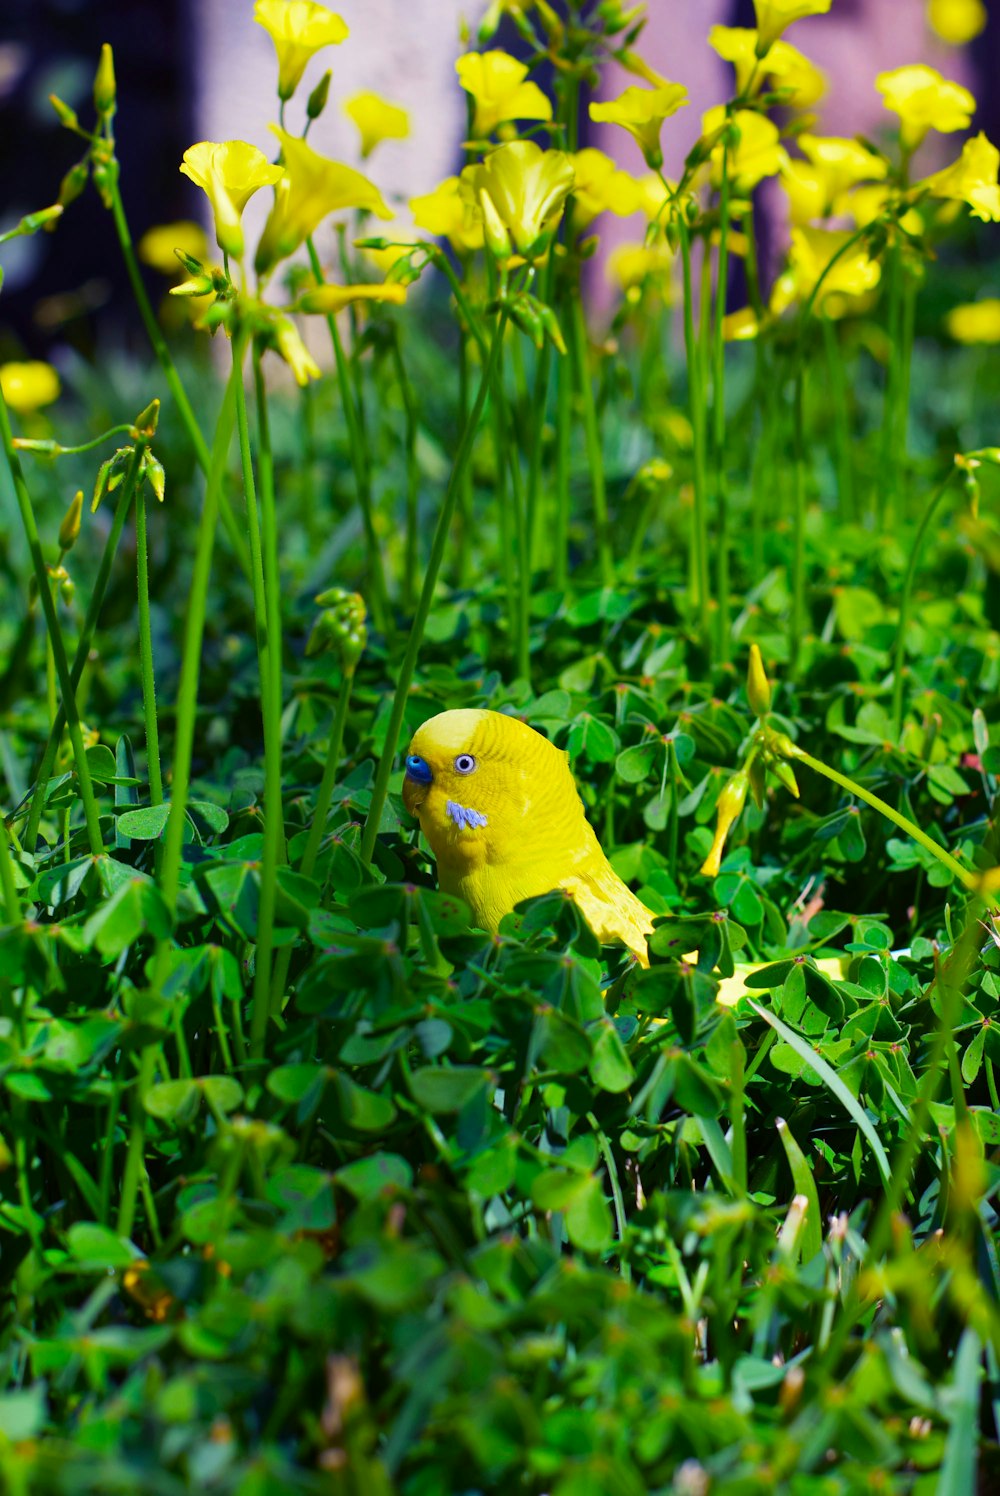 yellow bird on green grass during daytime